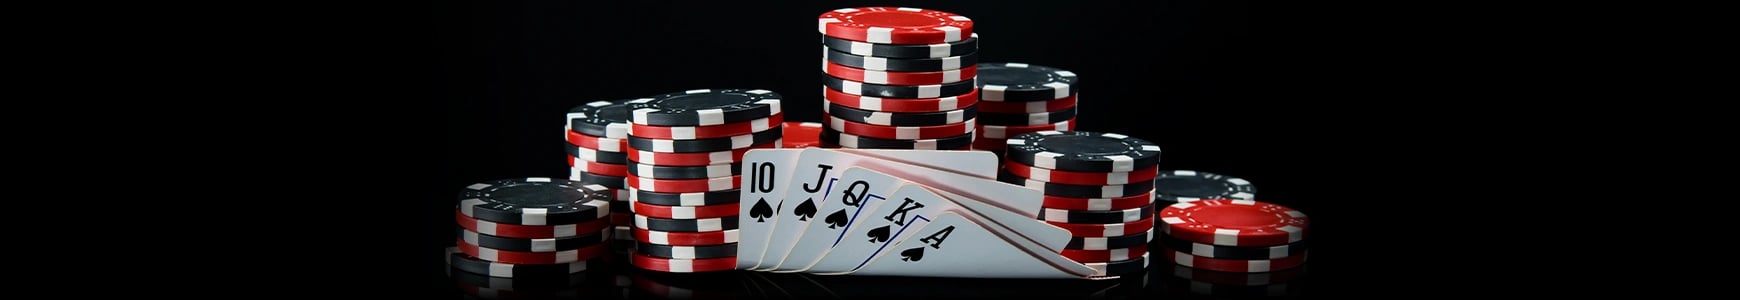 casino_black